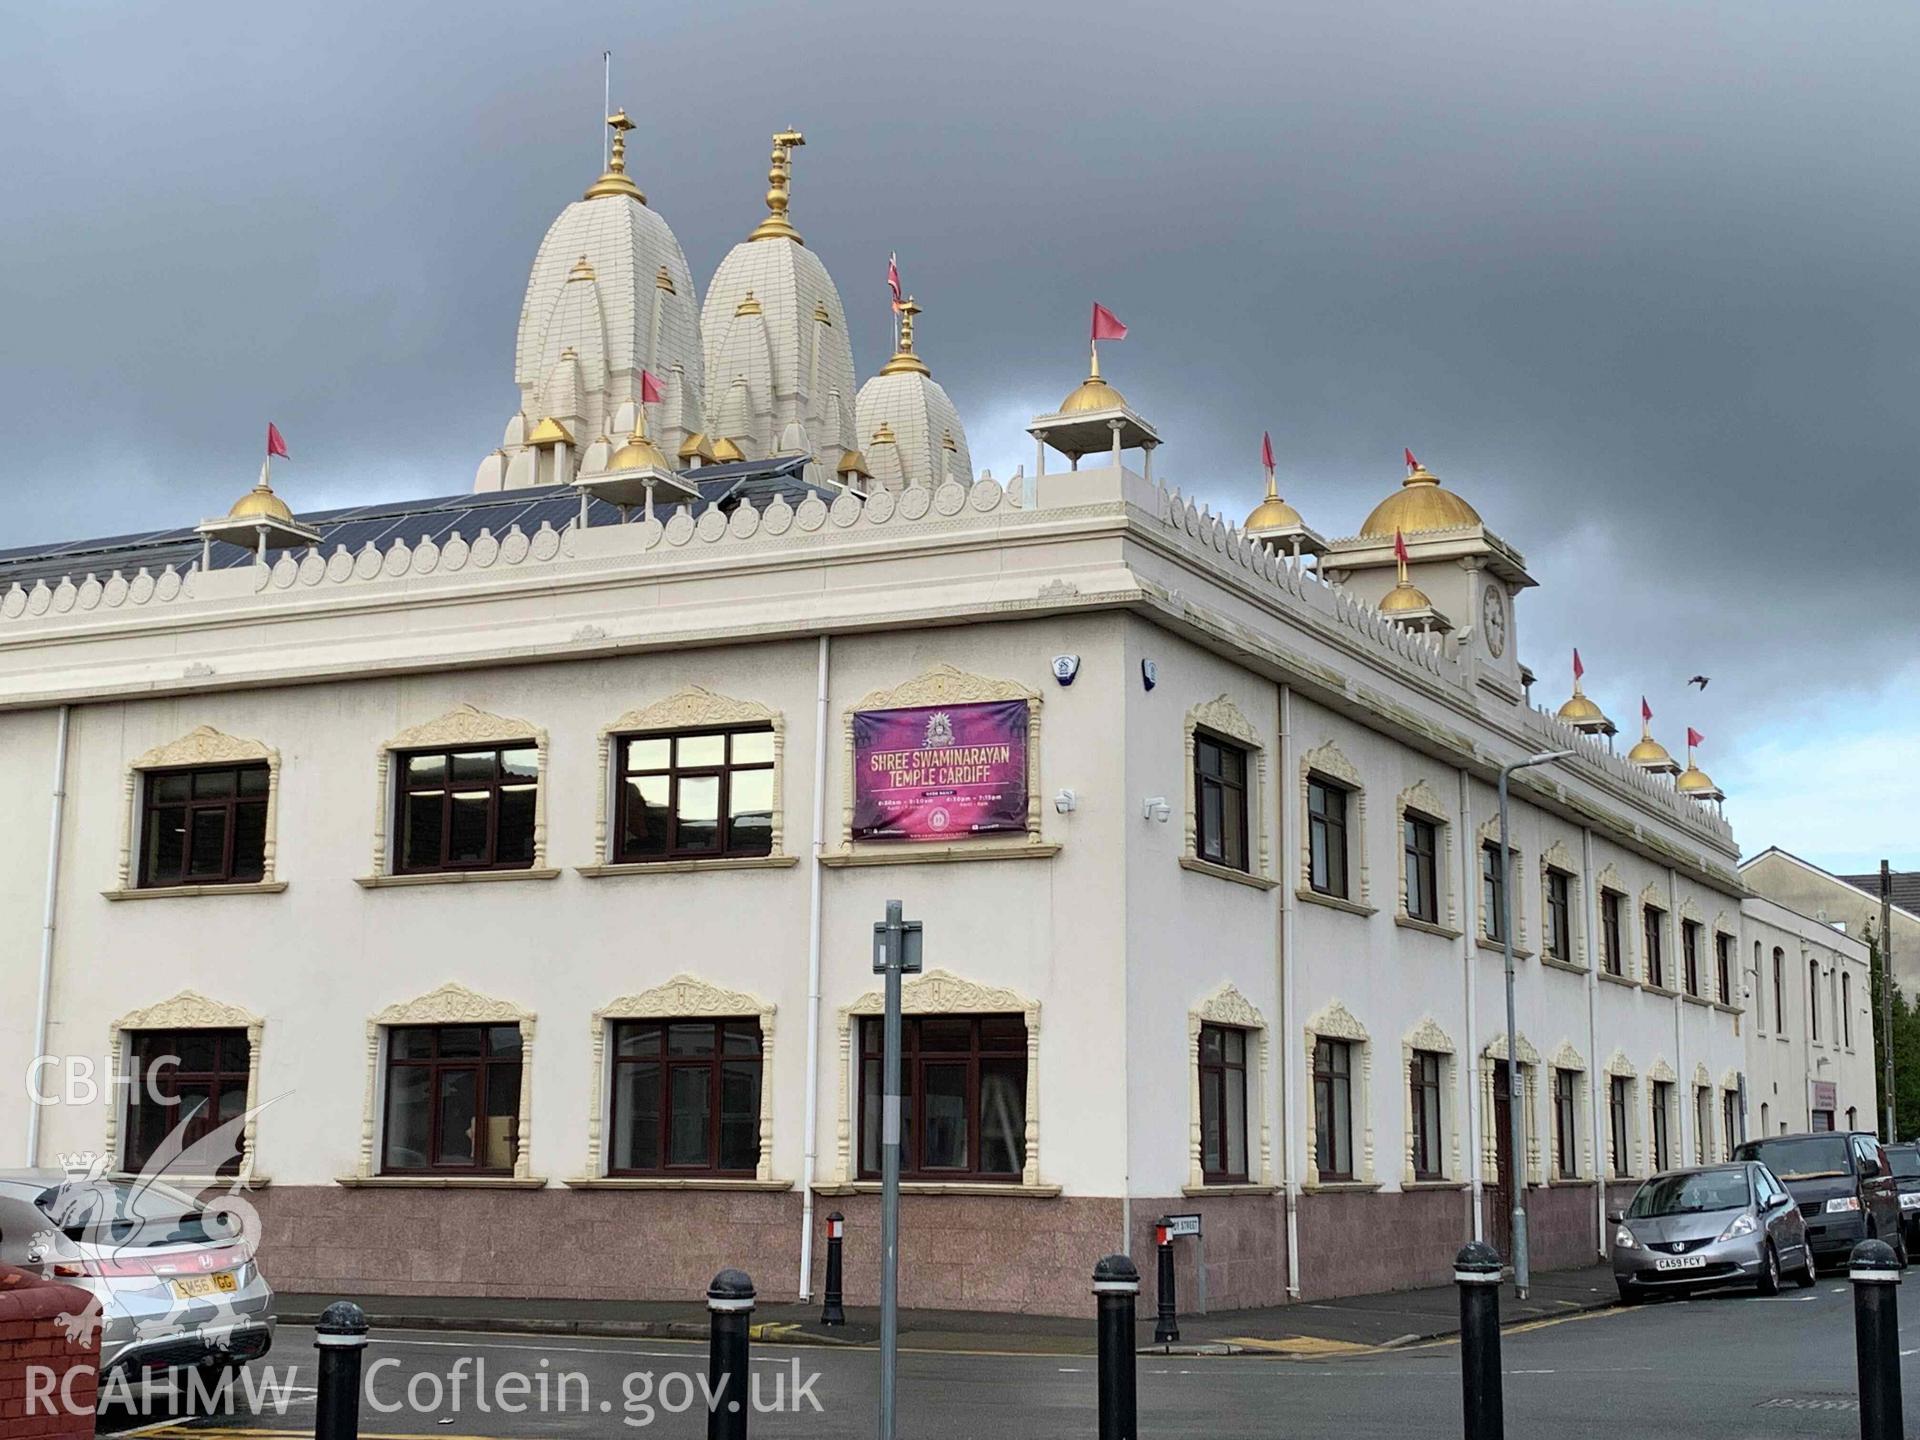 Photograph showing exterior of Shri Swaminaryan temple, Cardiff, taken in November 2021.